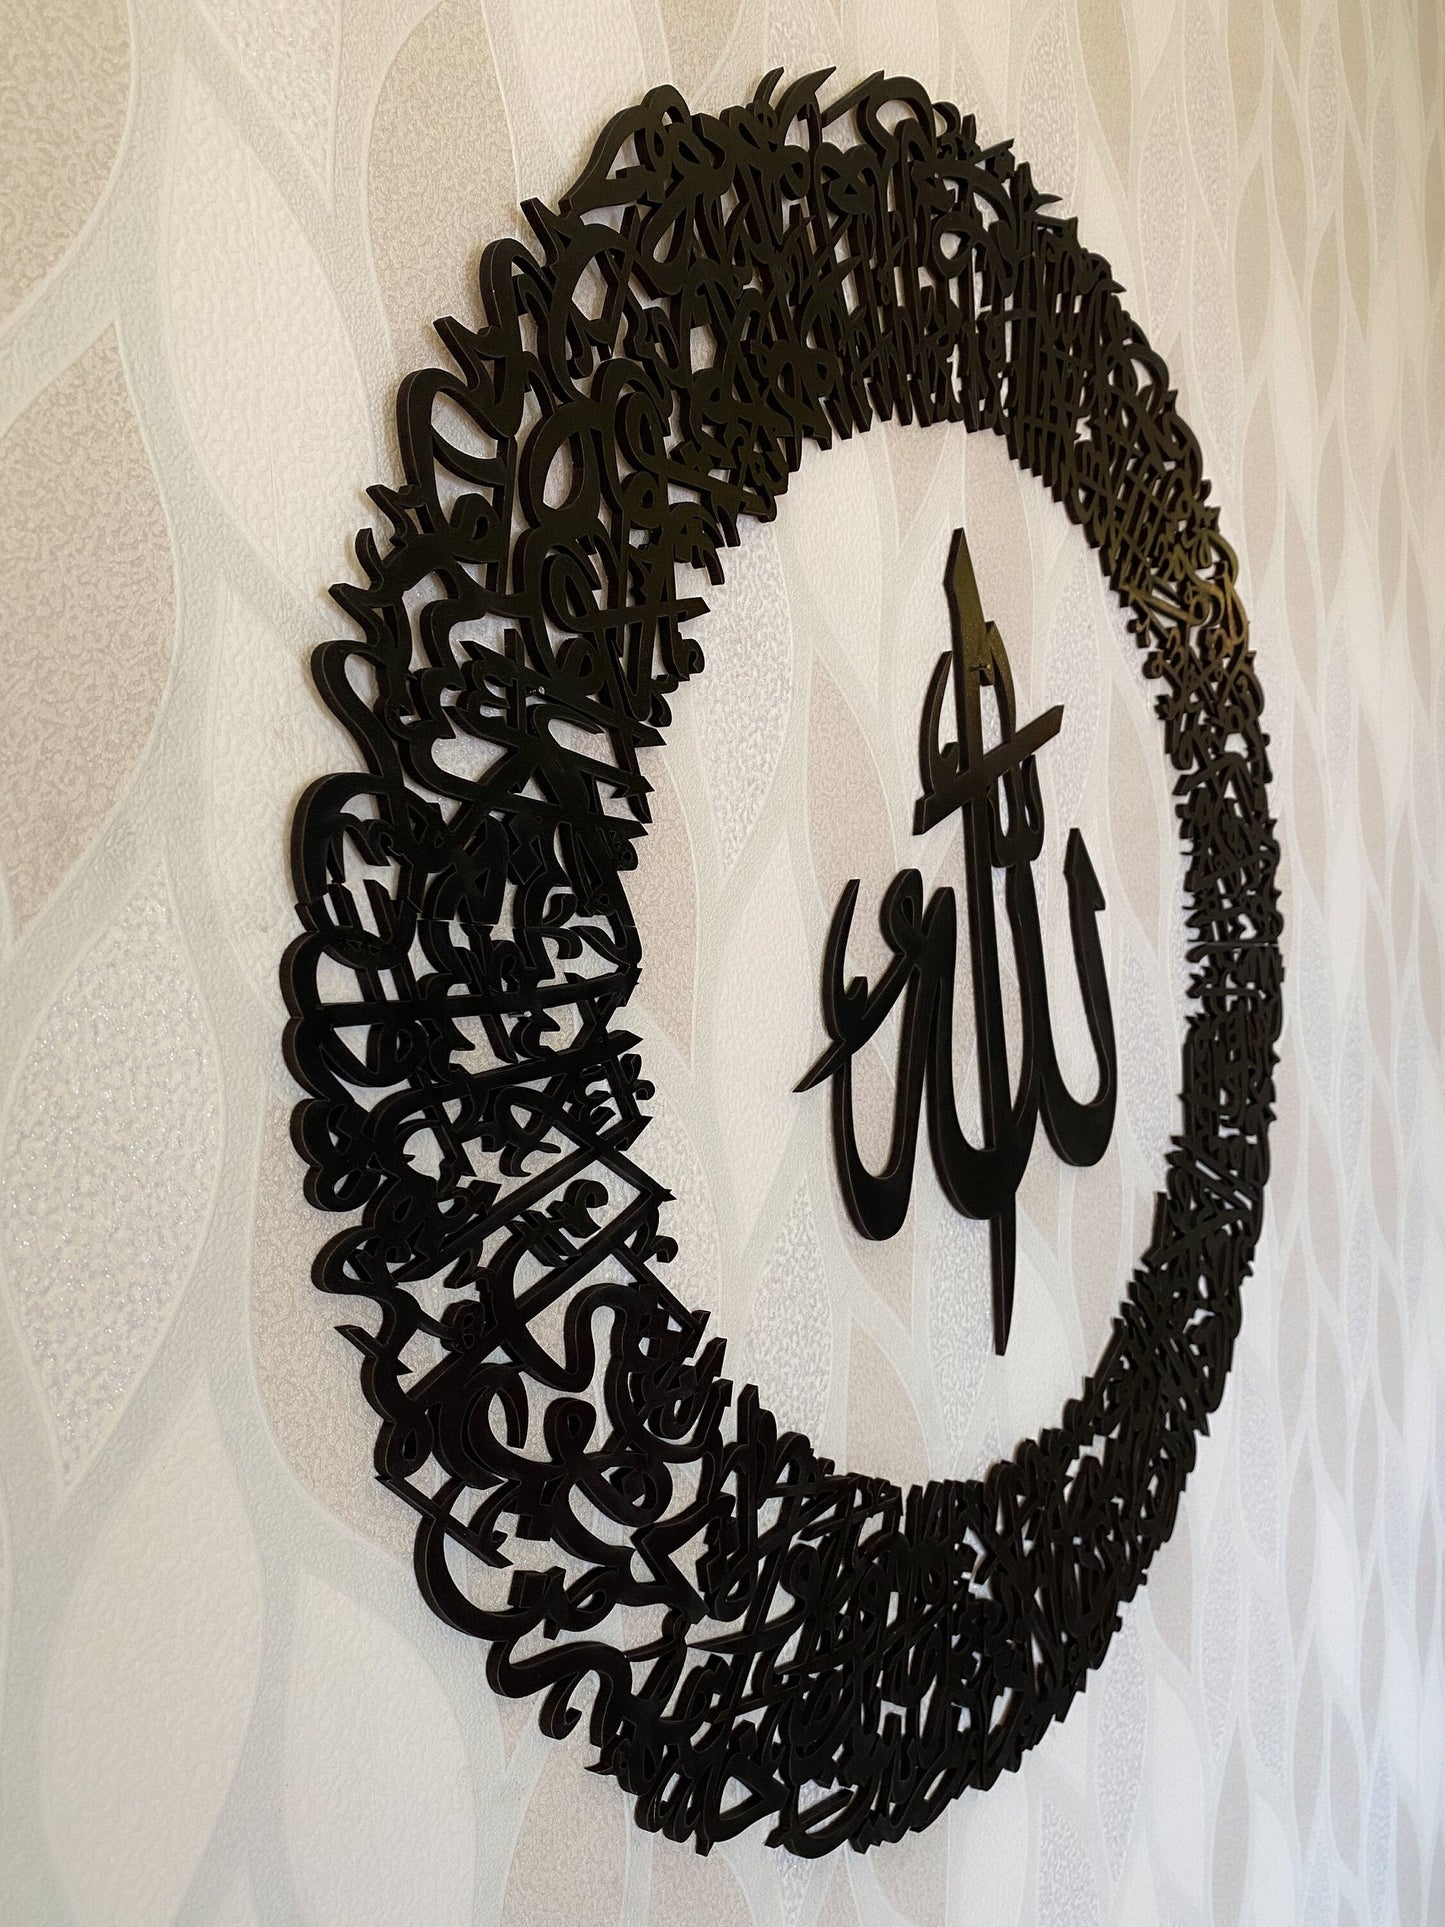 Ayatul Kursi Circular Acrylic/Wooden Islamic Wall Art